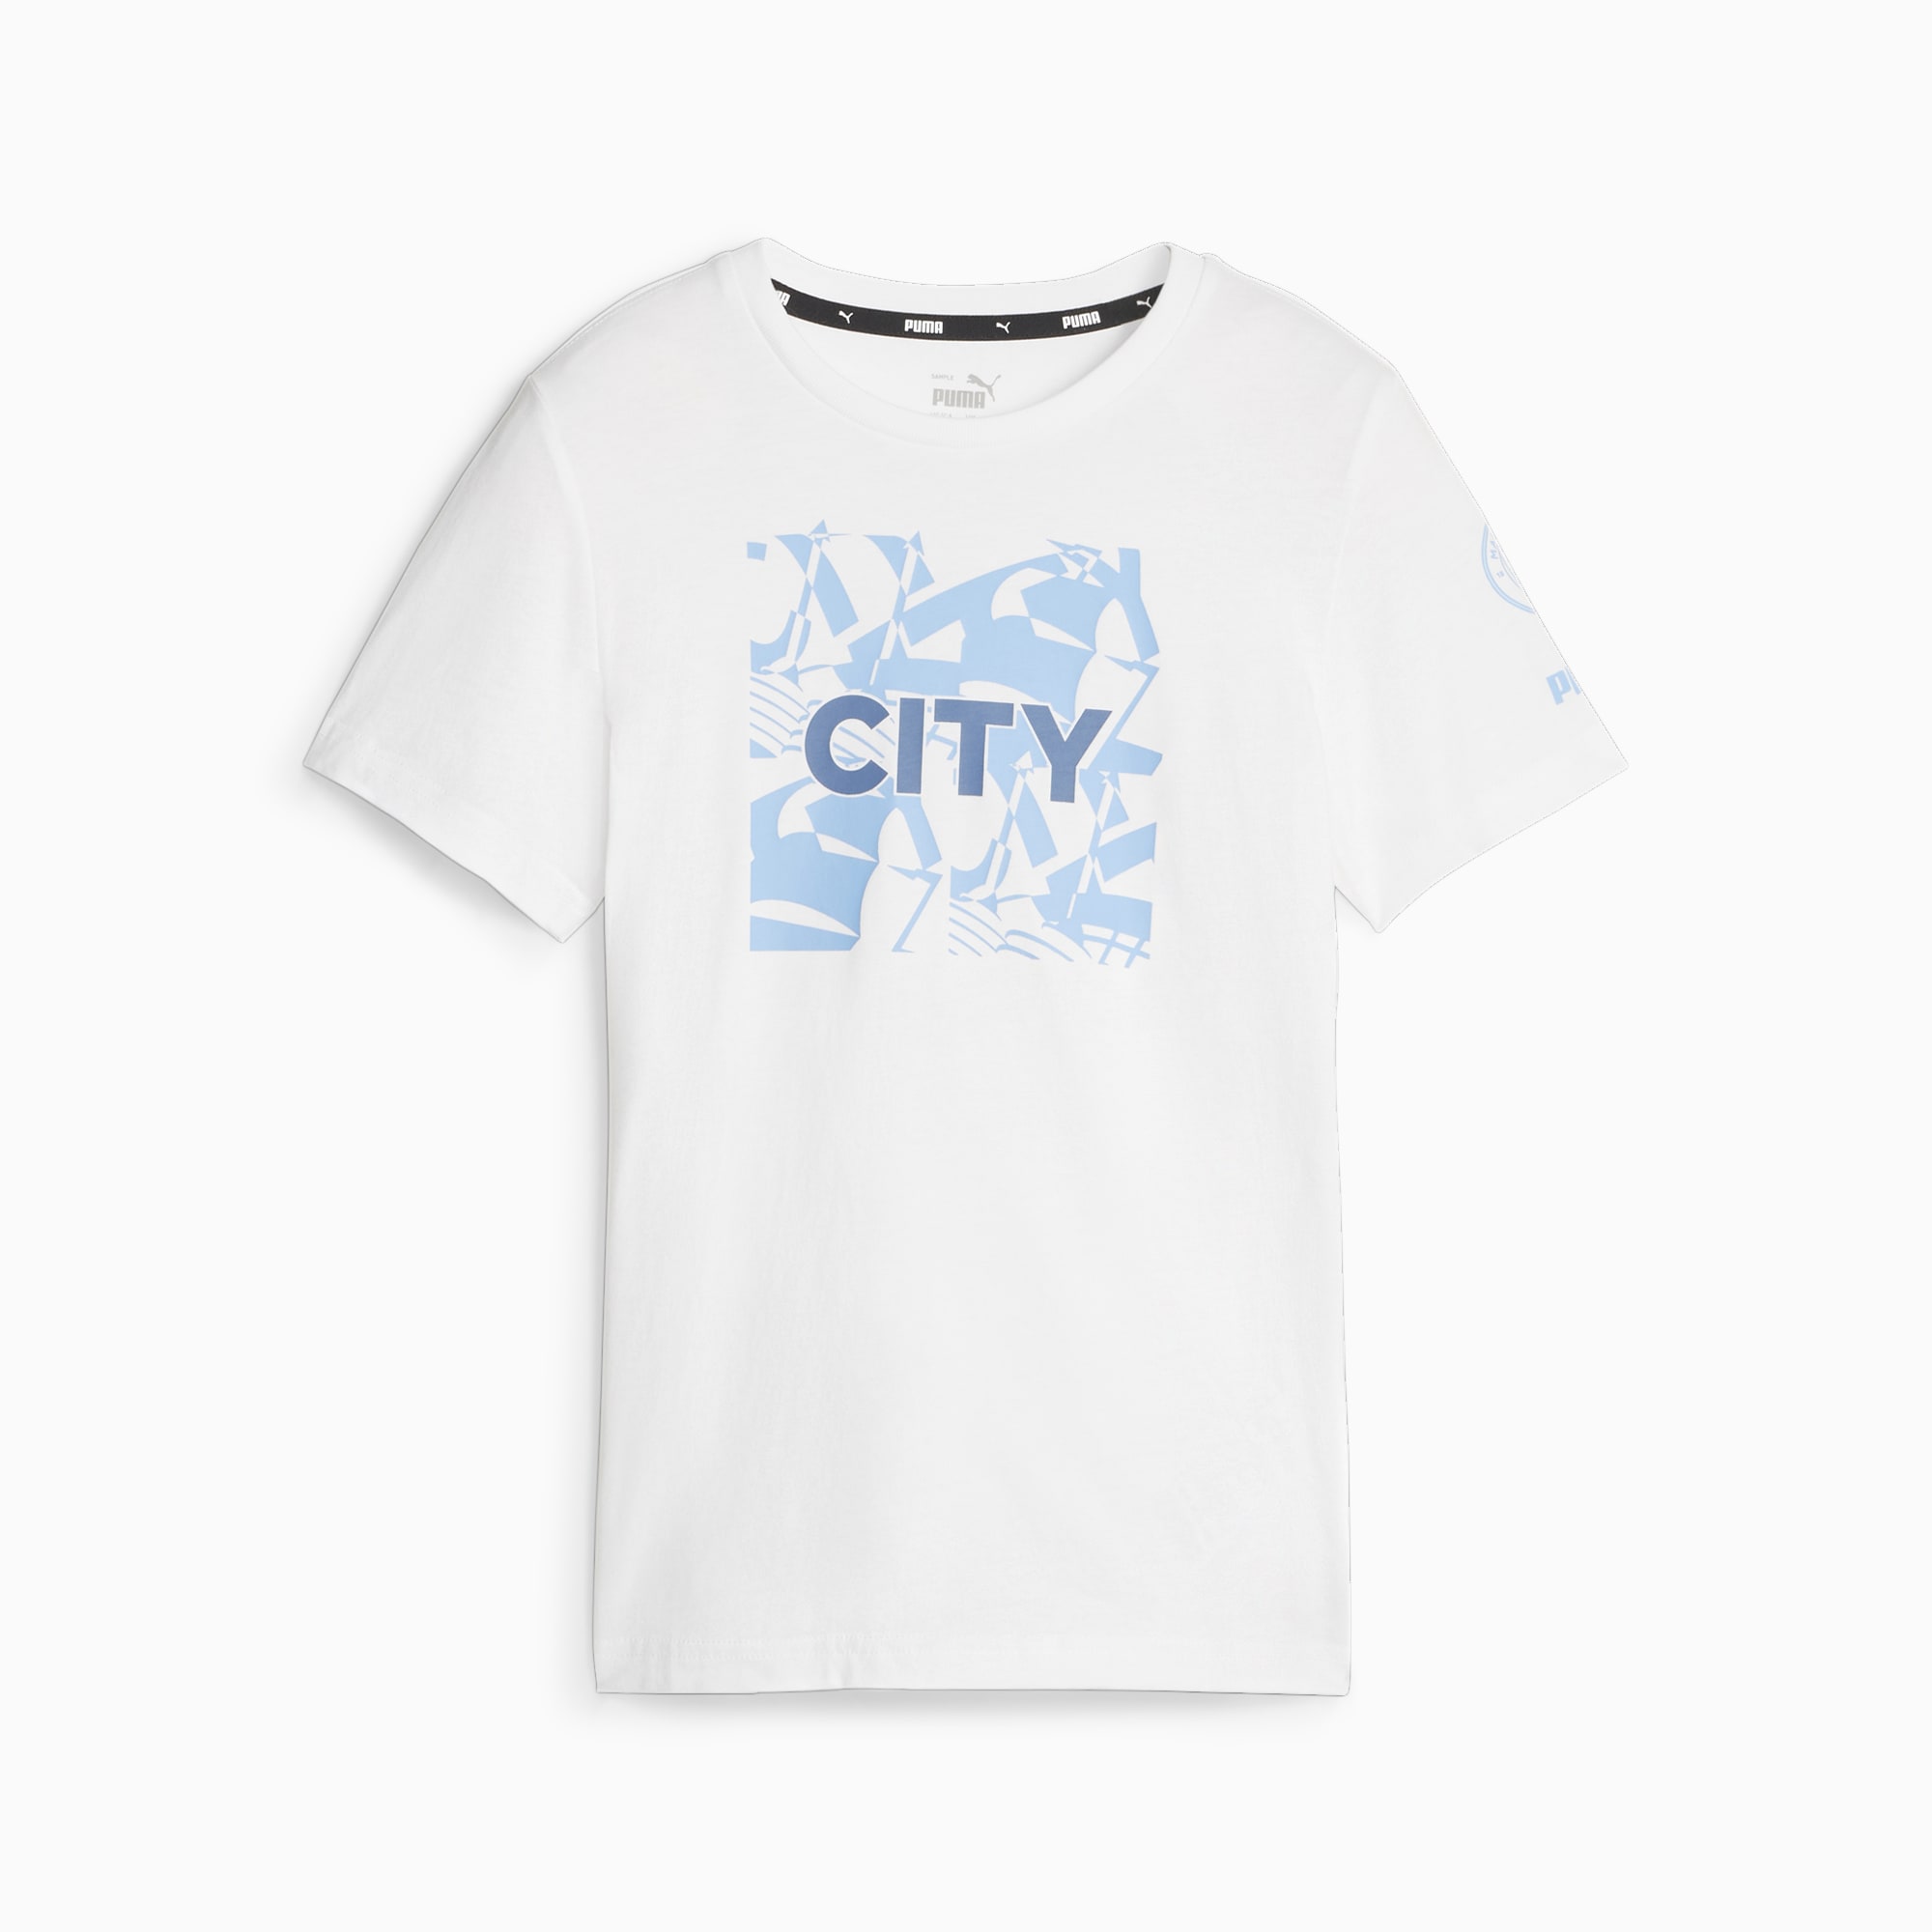 PUMA Manchester City Ftblcore Youth Graphic T-Shirt, White/Light Blue